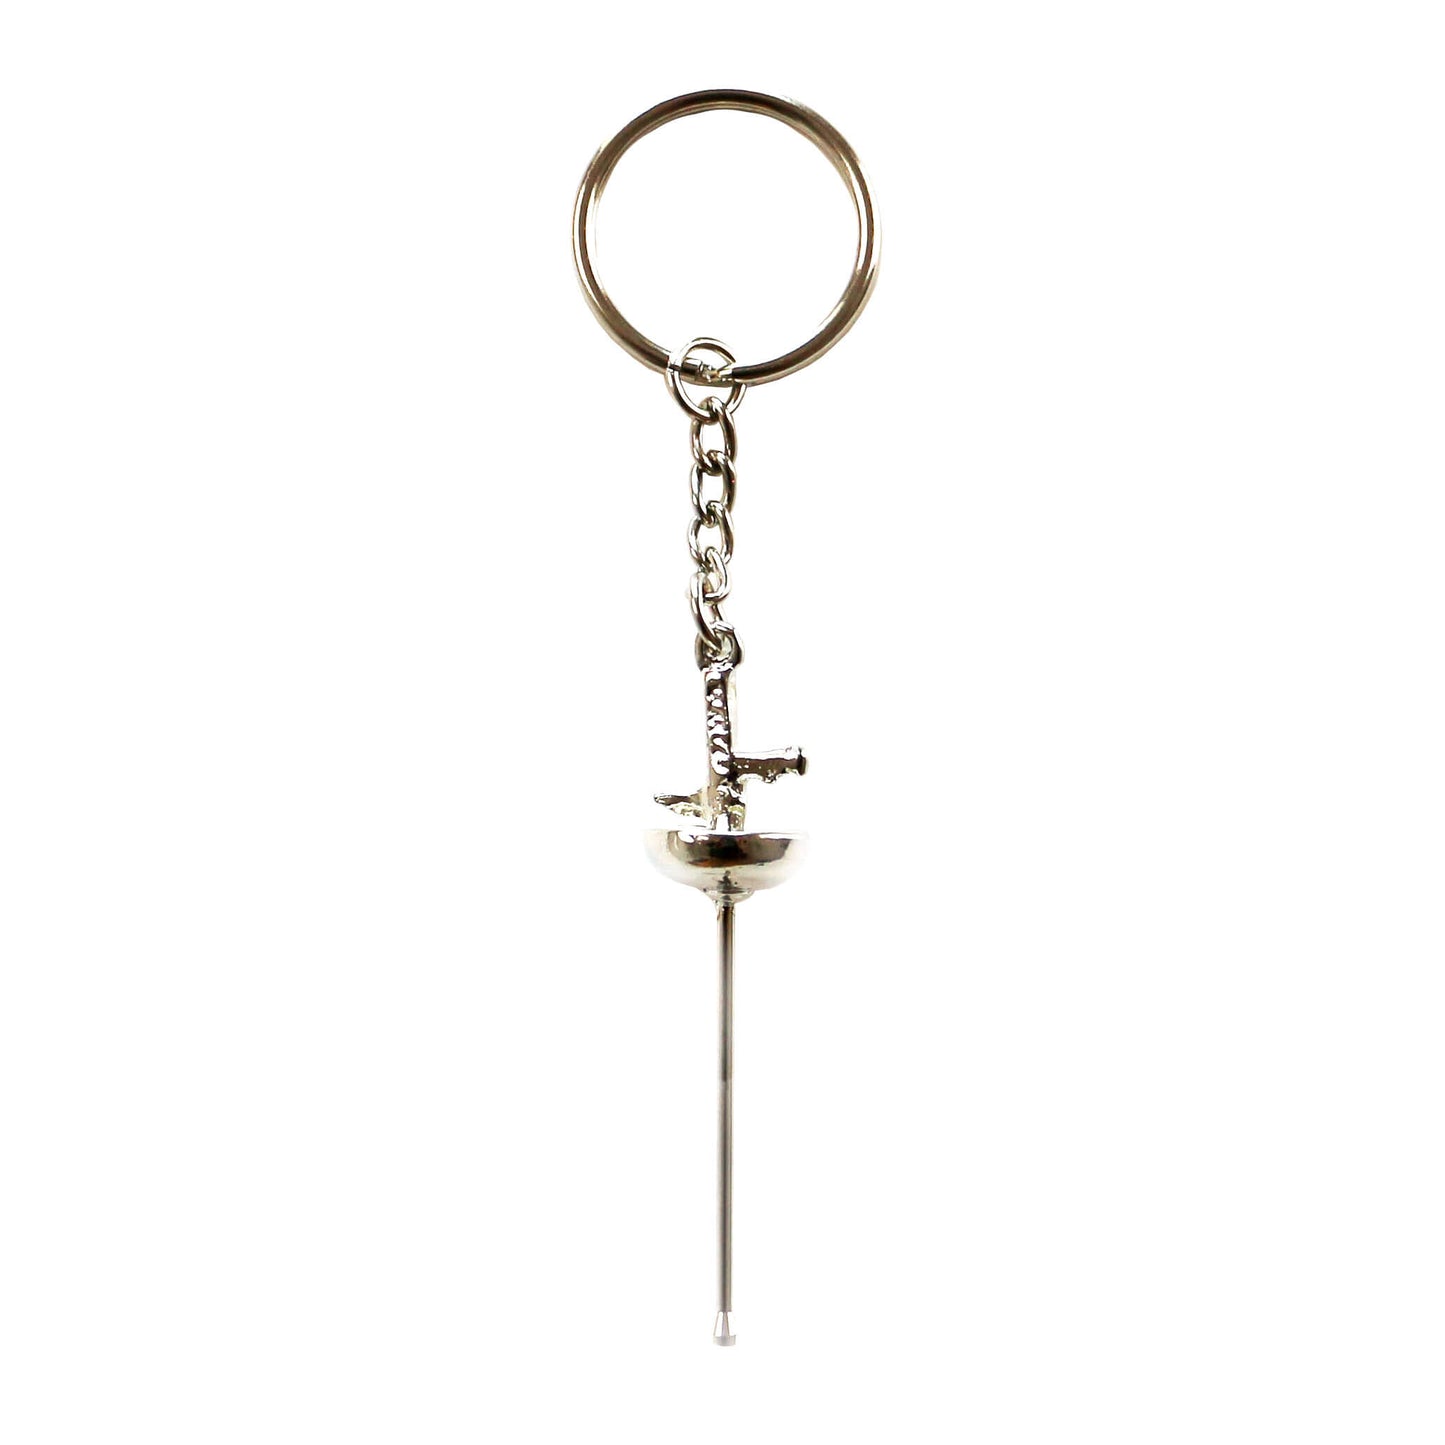 LEONARK Fencing Keychain Souvenir Present for Fencing Sport Fans Gifts for Fencer (Silver)